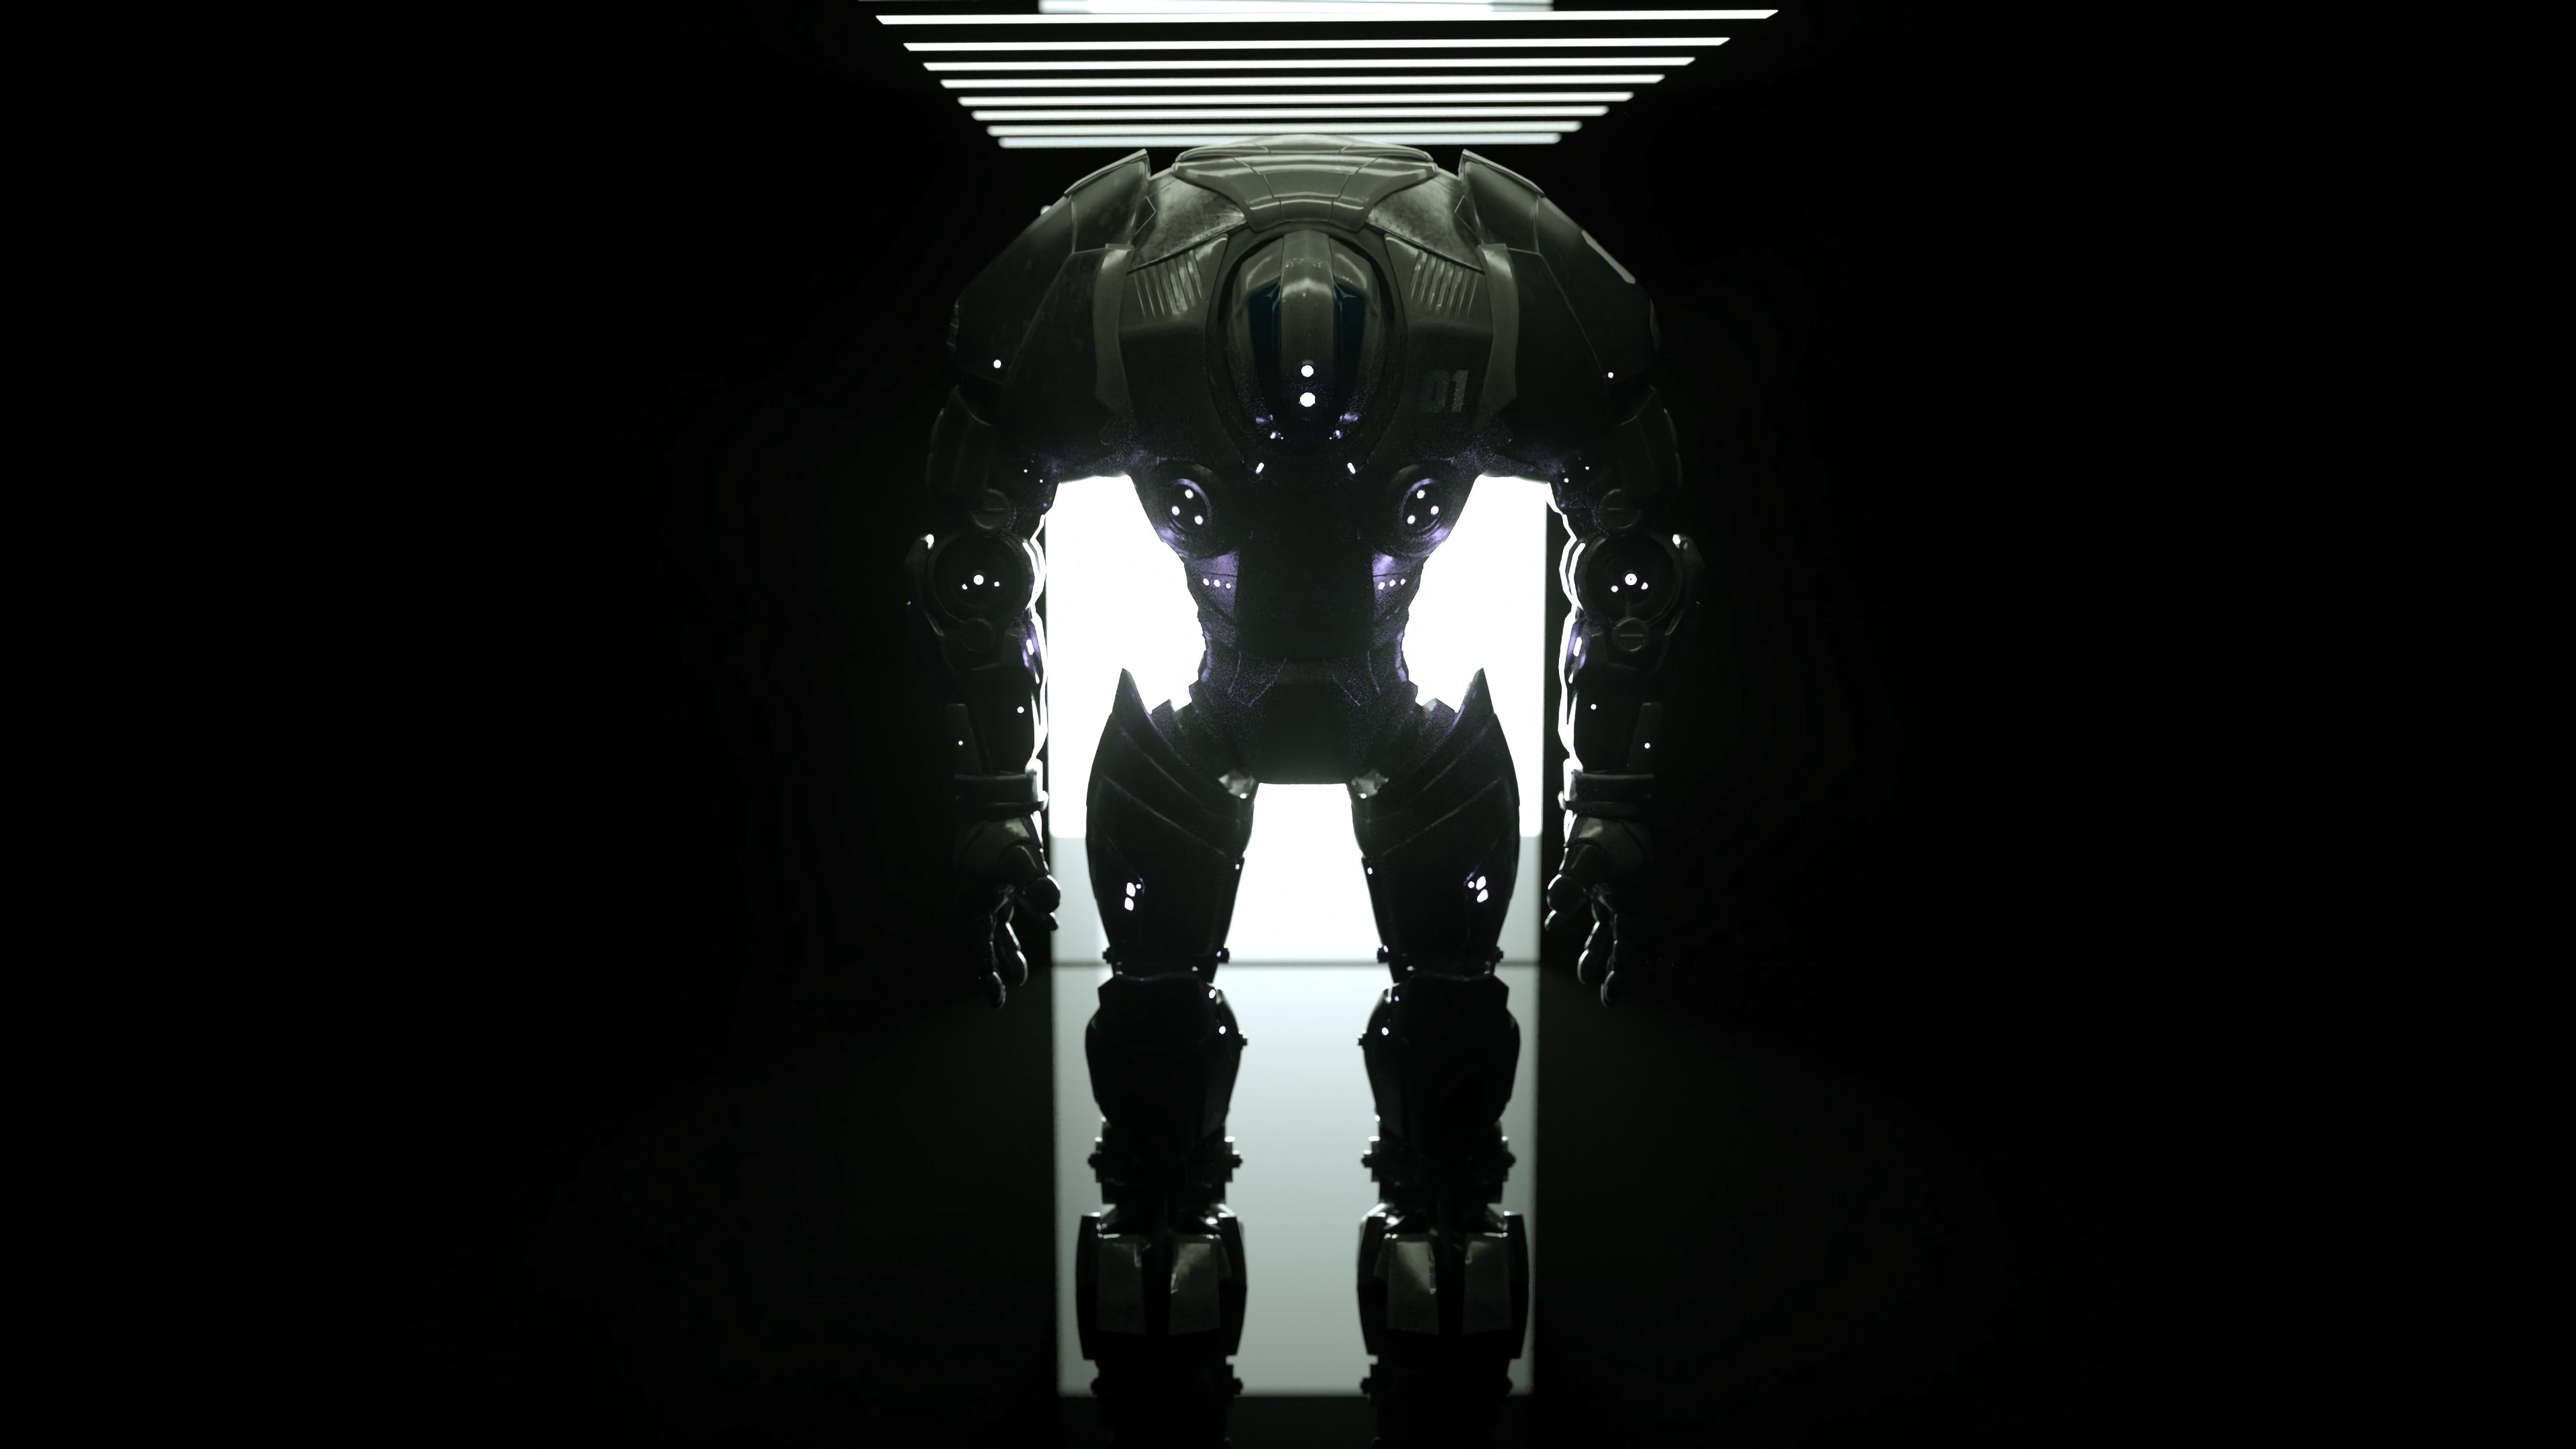 Download wallpaper 3840x2160 cyborg, robot, technology, glow HD background